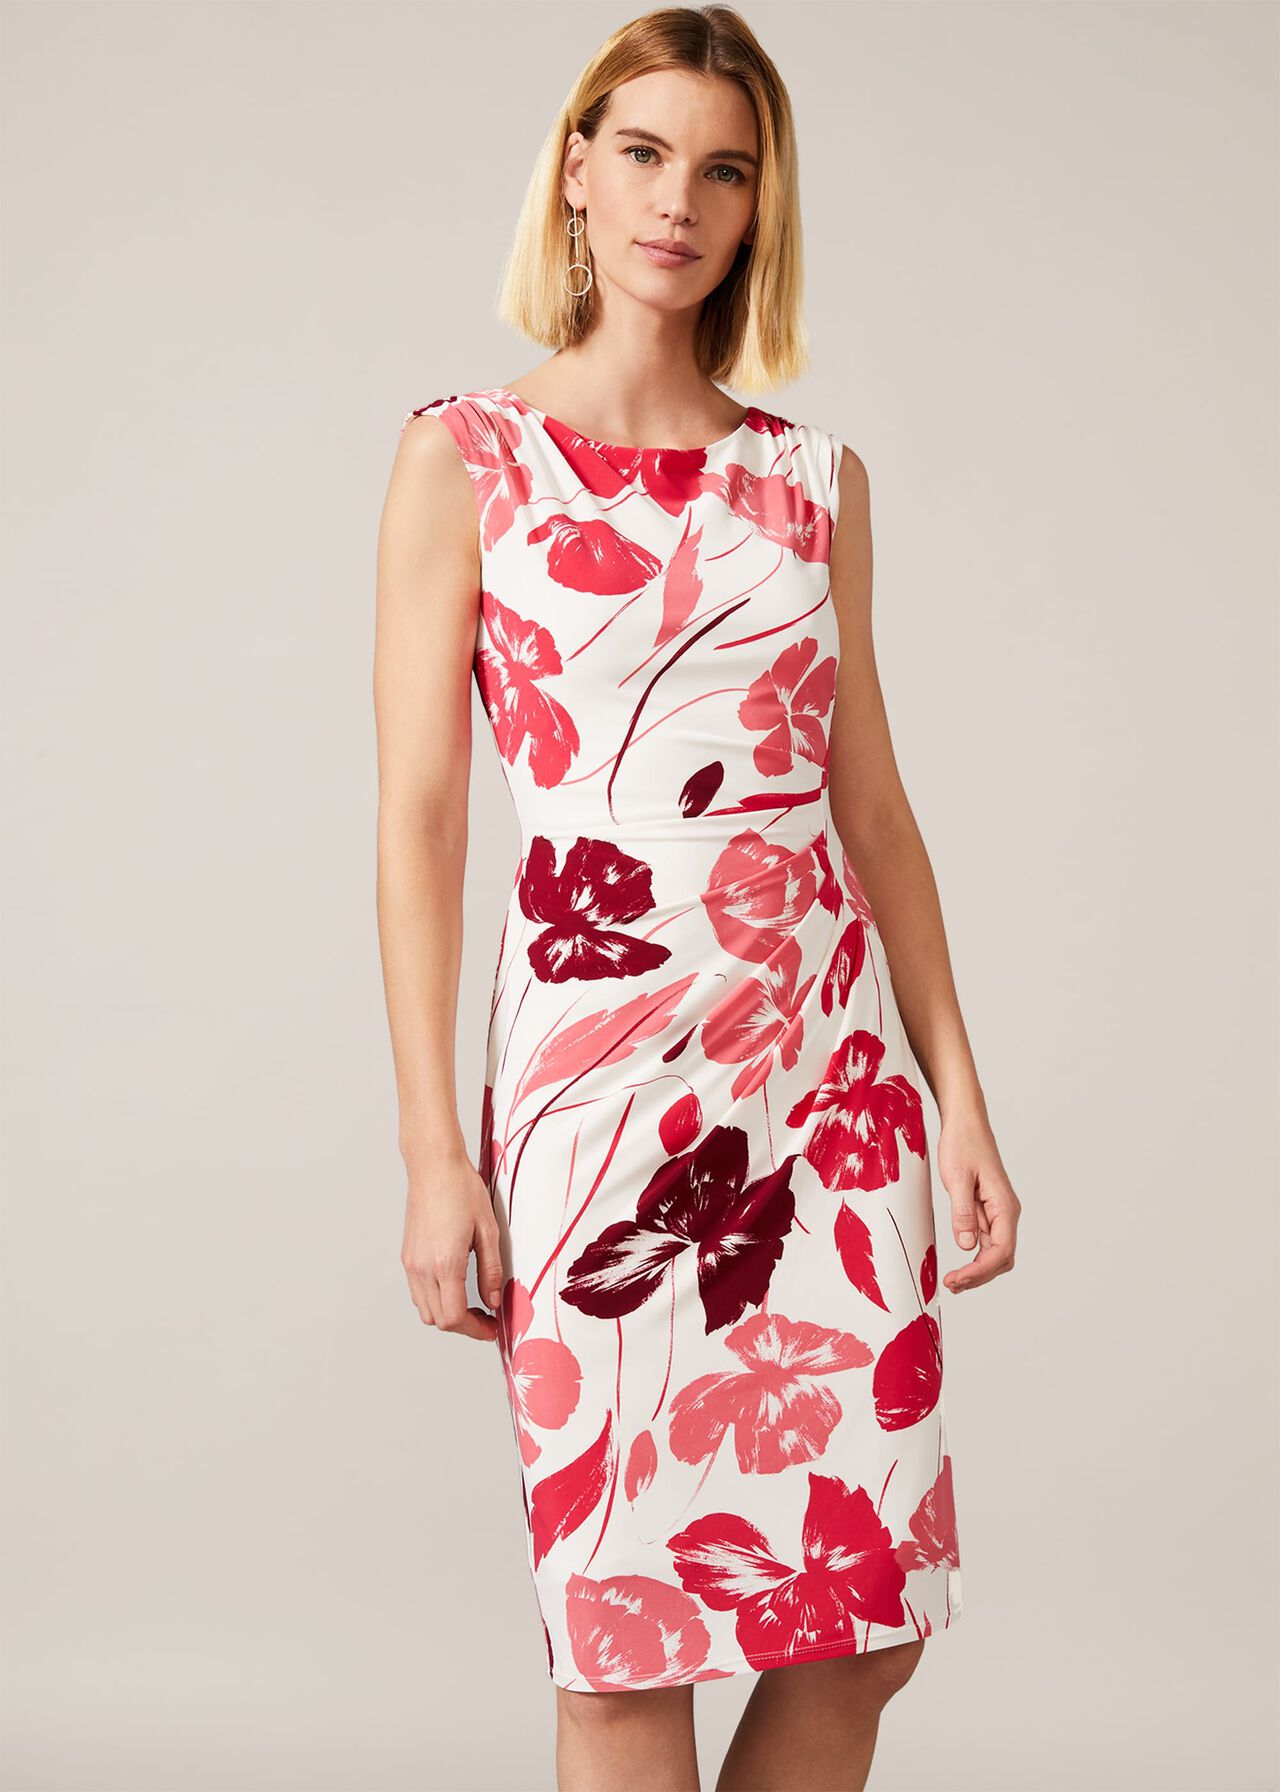 Alexi Floral Jersey Dress